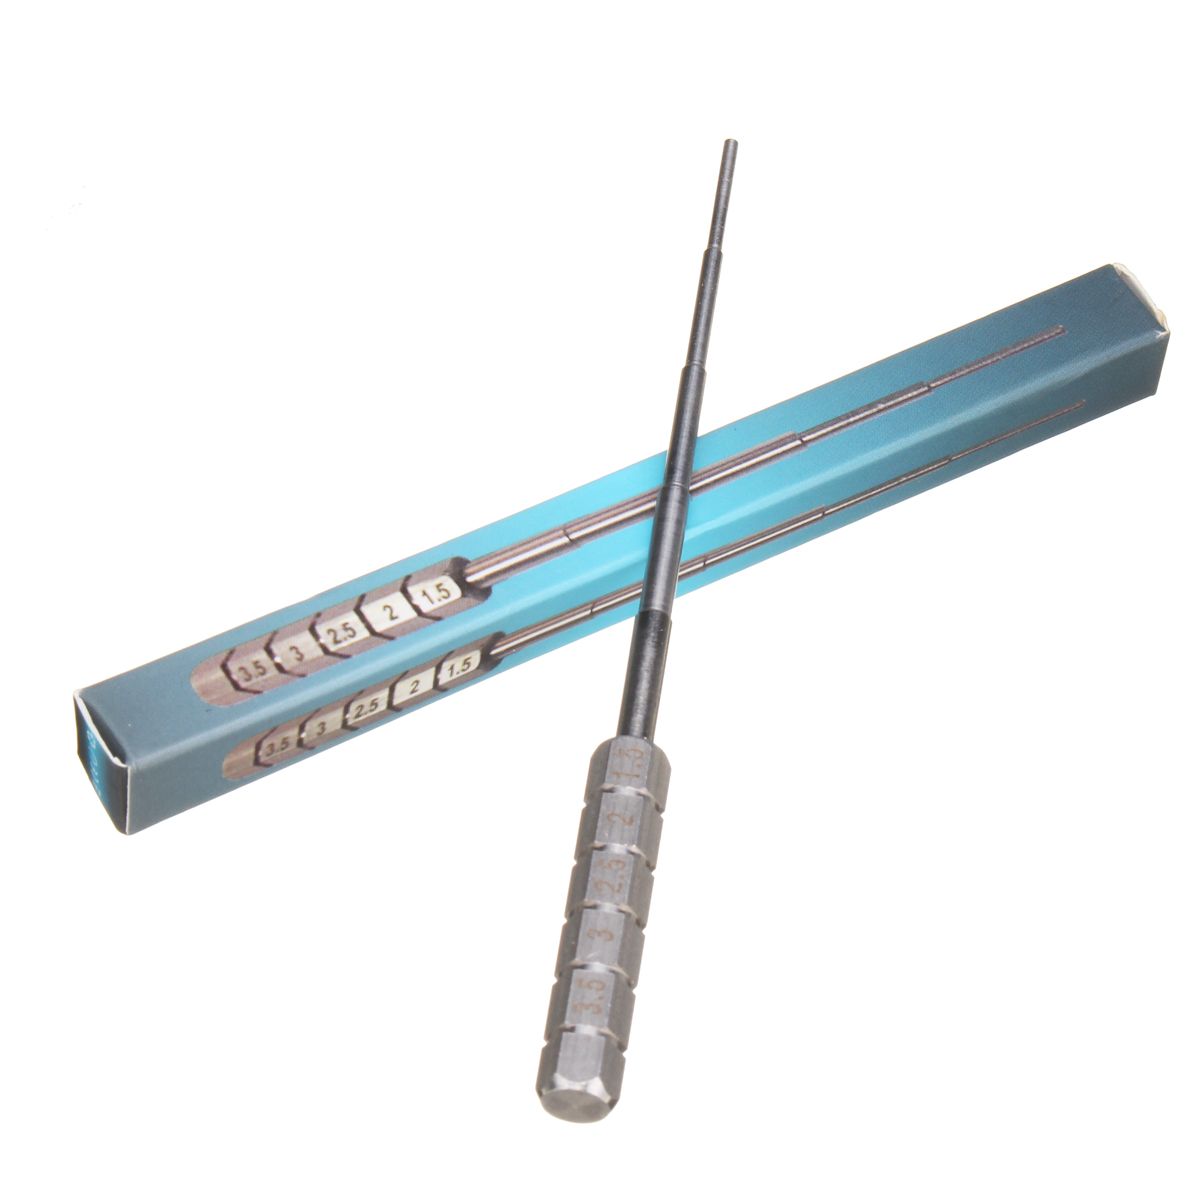 Pliers-Stripping-Tools-Electronic-Cigarette-DIY-Tool-Kit-for-RDA-RBA-RTA-DIY-Vape-Pliers-Tool-1313431